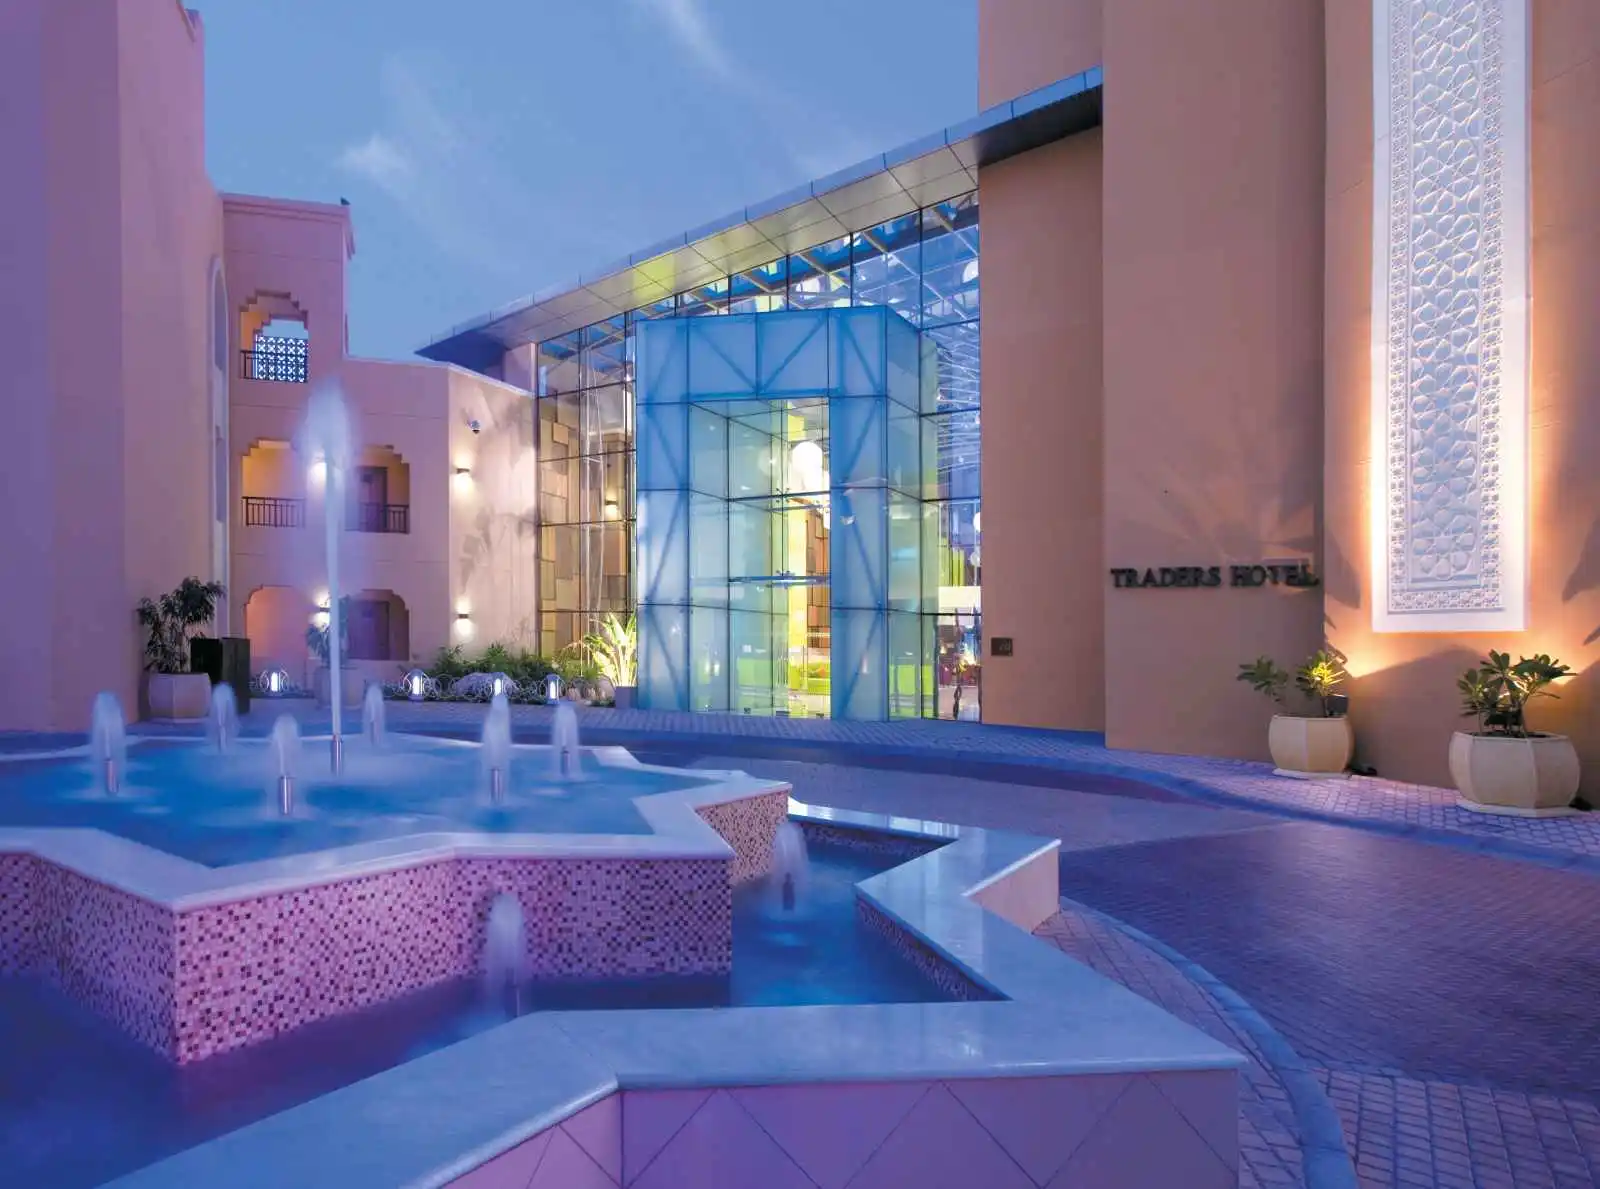 Abou Dhabi : Traders Hotel, Qaryat Al Beri